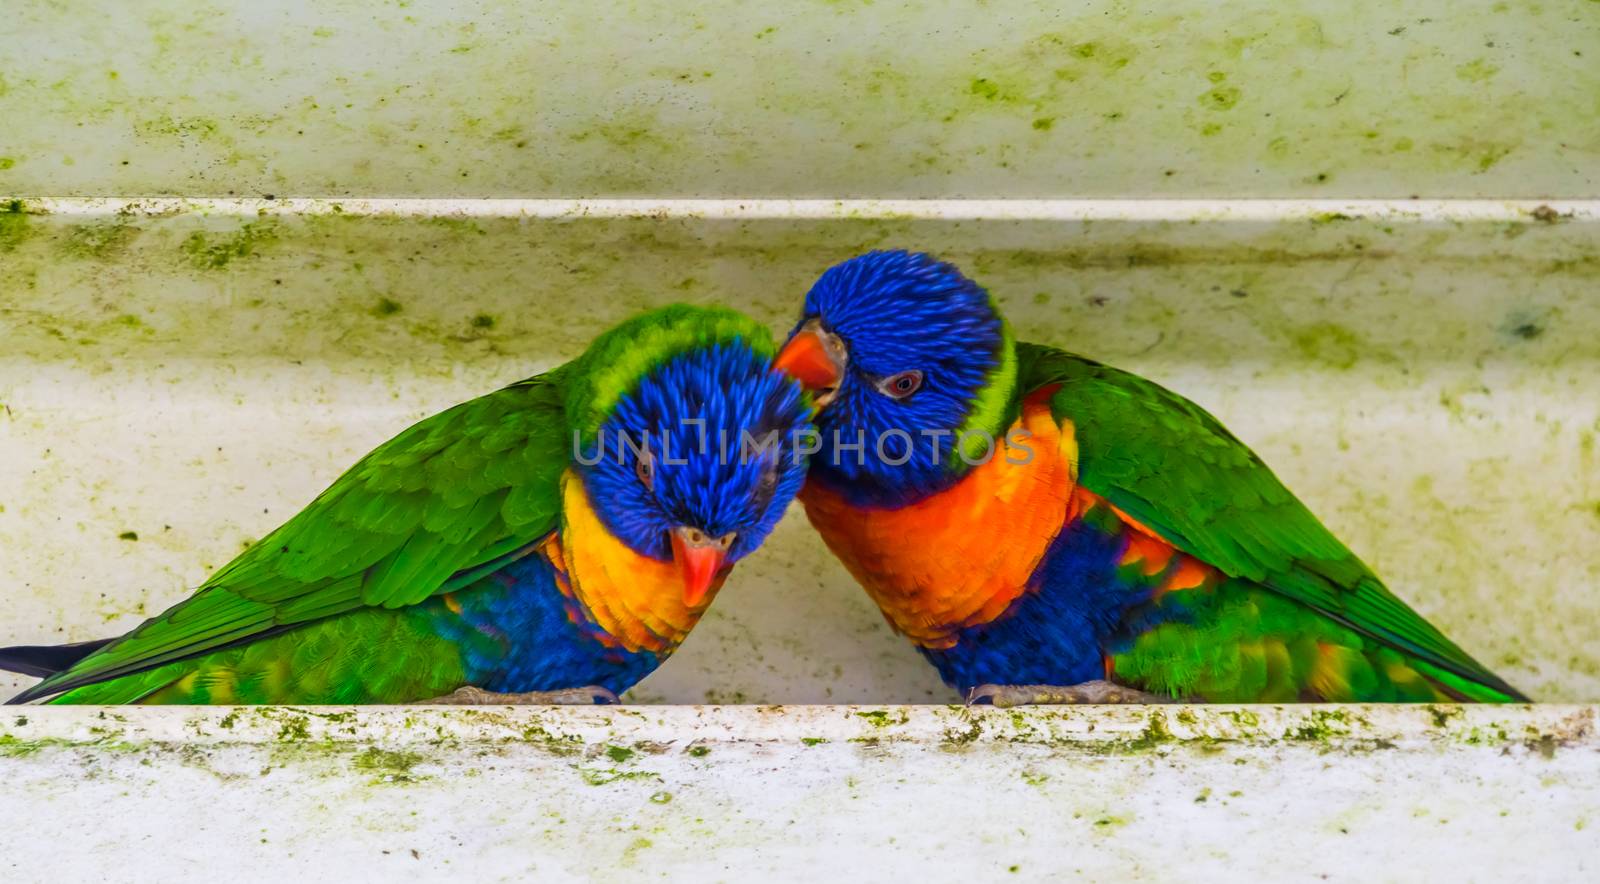 closeup of a rainbow lorikeet couple preening each other, Typical bird behavior, Tropical animal specie from Australia by charlottebleijenberg